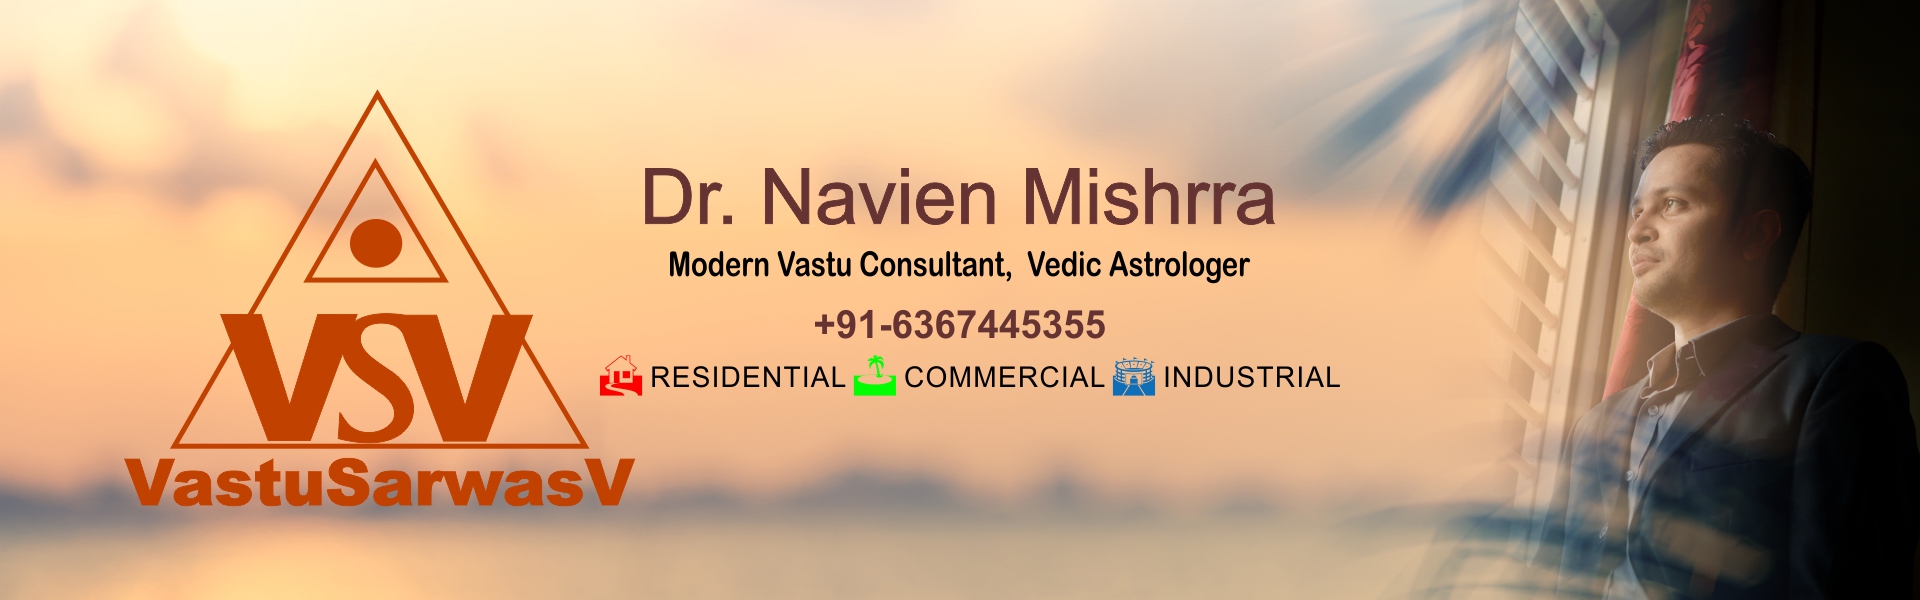 Vastu Consultant in Jaipur Rajasthan - Vastu Sarwasv - #1 Vastu Services Near You by Vastu Expert Dr Navien Mishrra